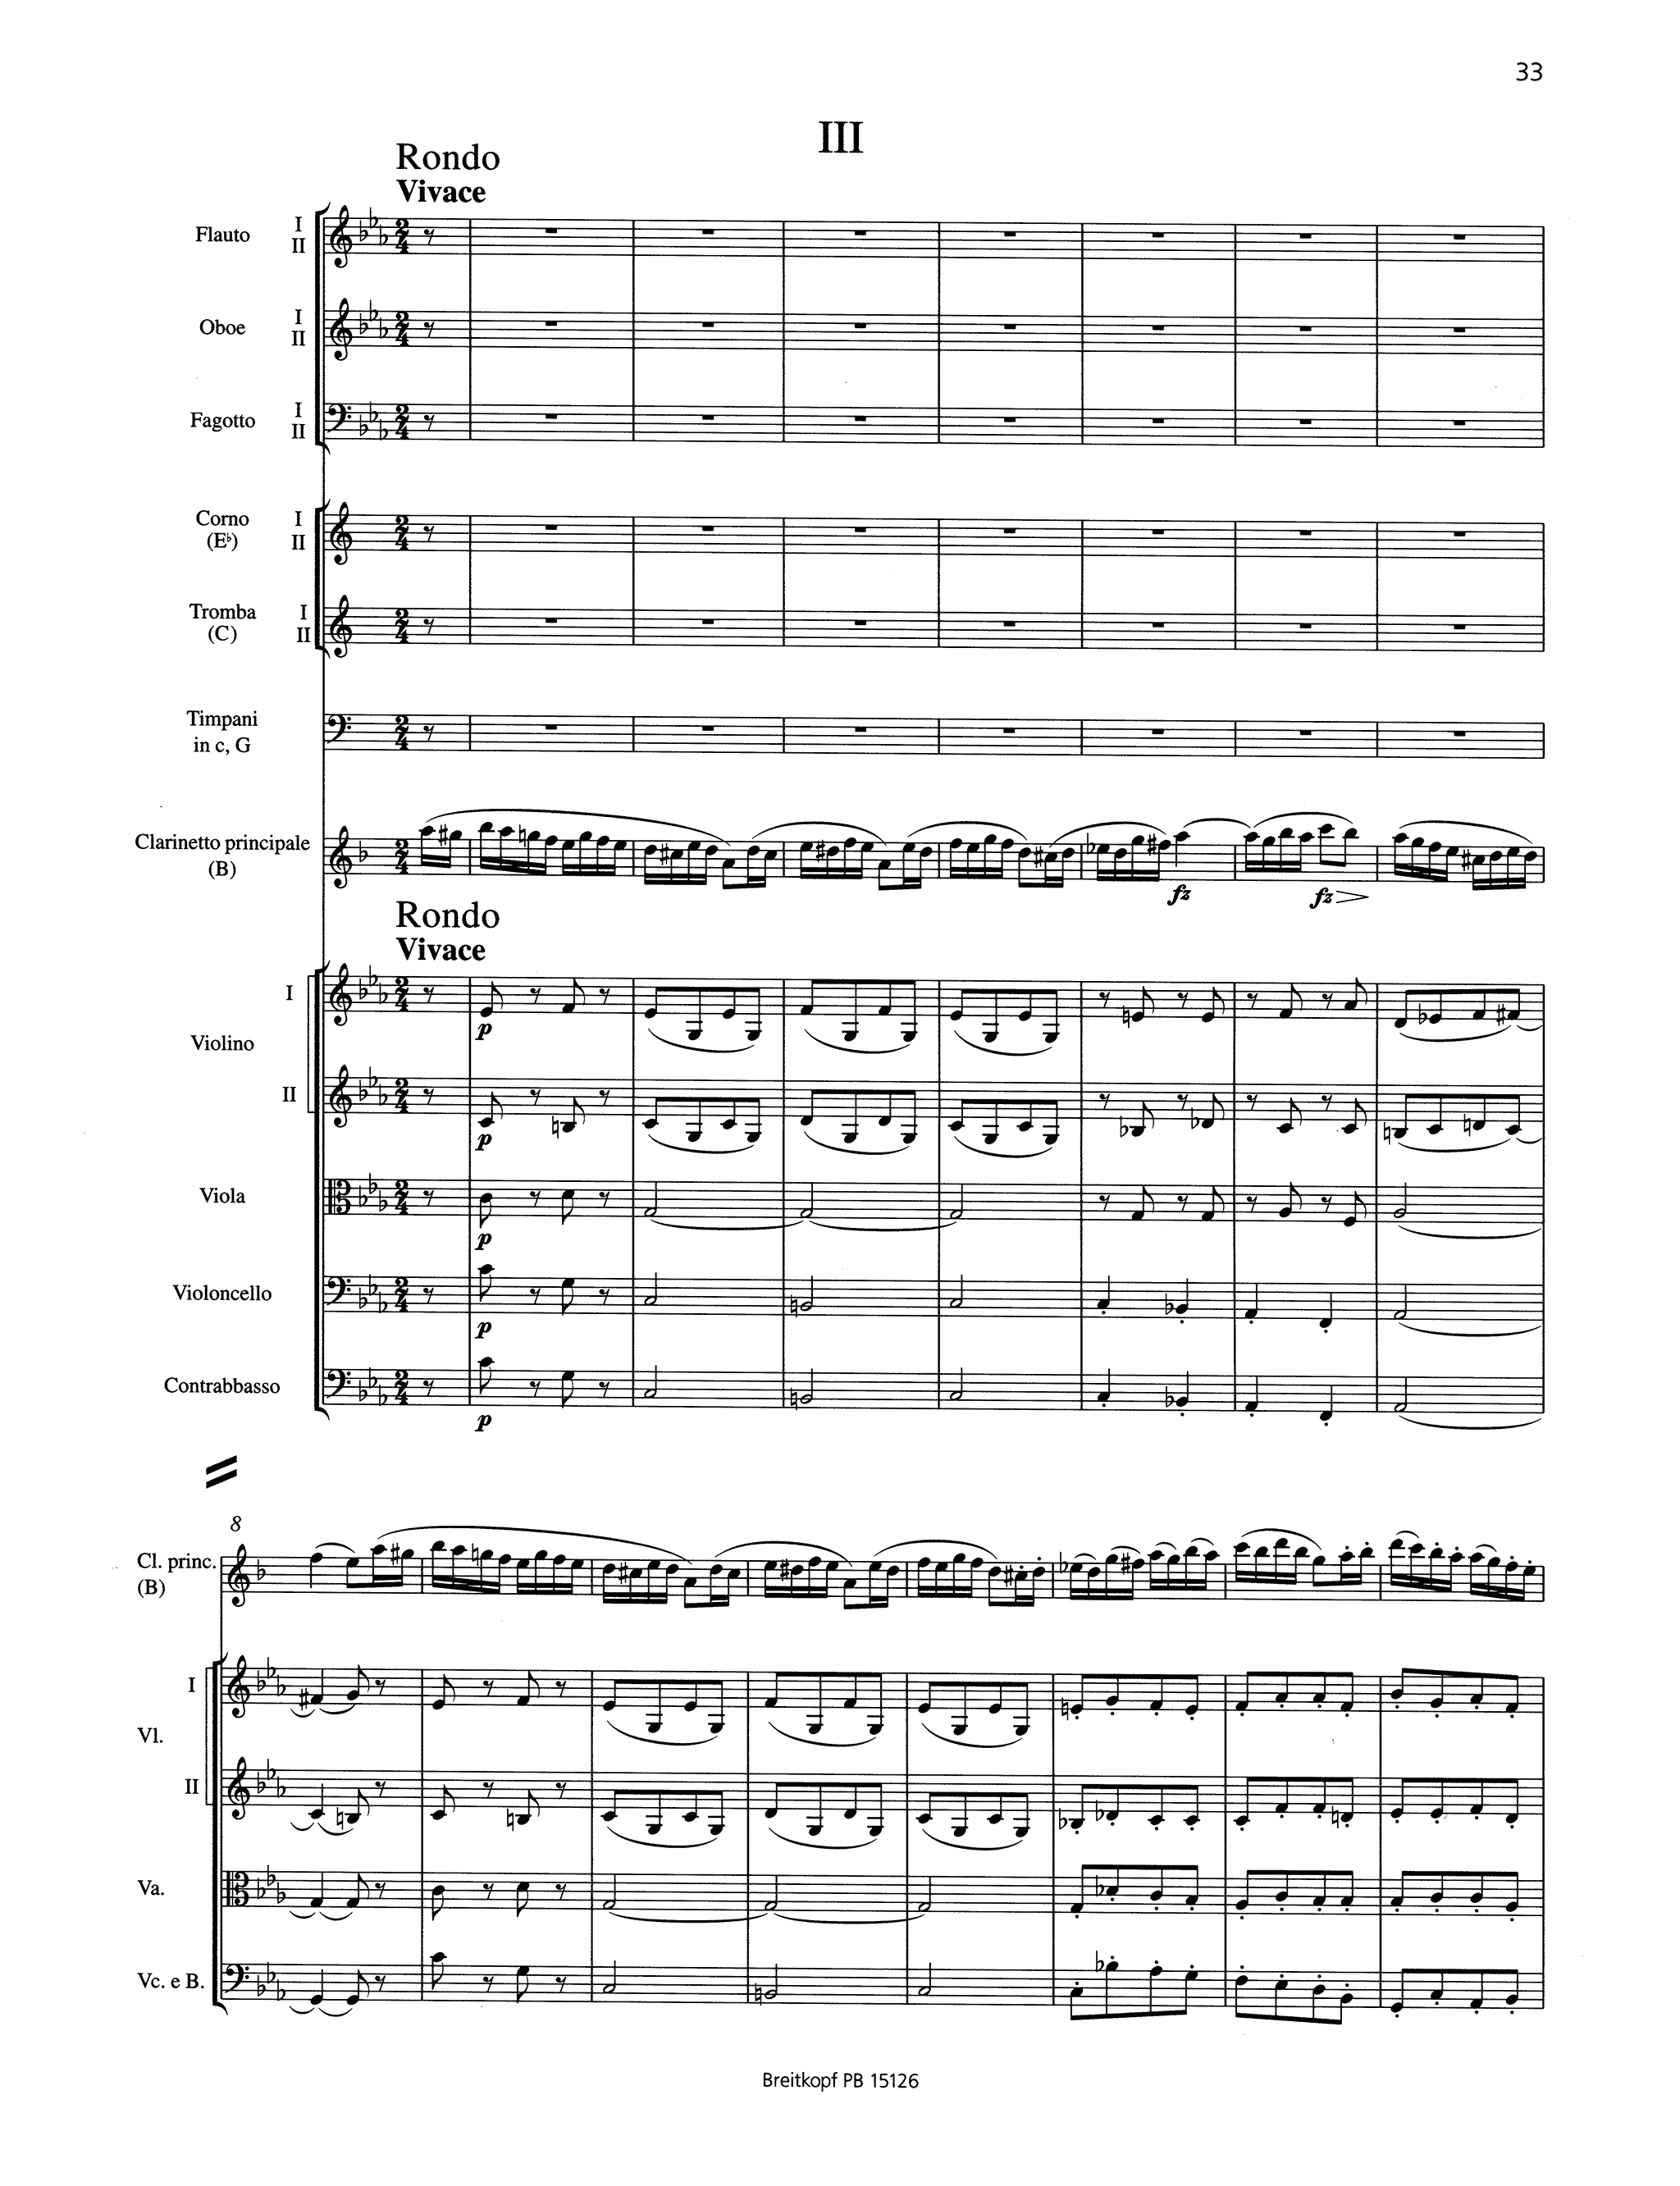 Spohr Clarinet Concerto No. 1 in C Minor, Op. 26 - Movement 3